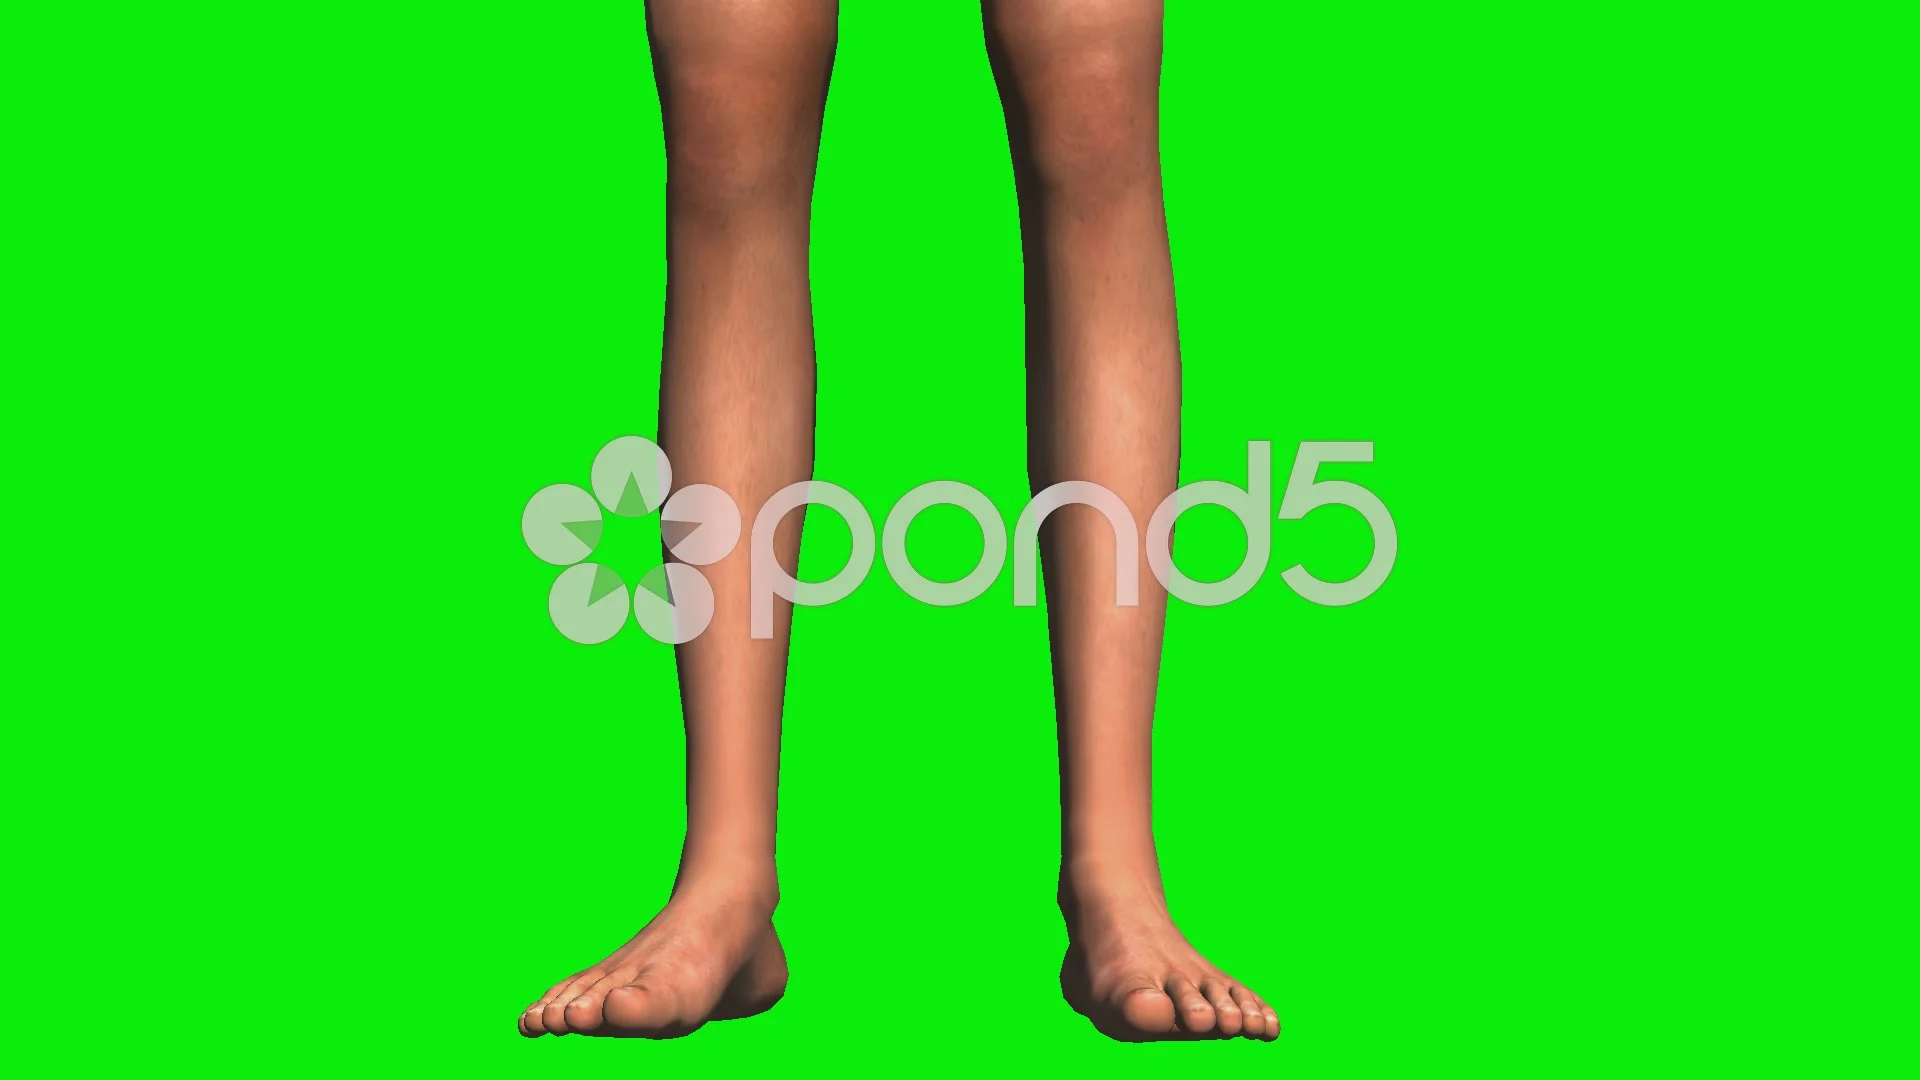 https://images.pond5.com/pair-skinny-male-legs-standing-058591620_prevstill.jpeg